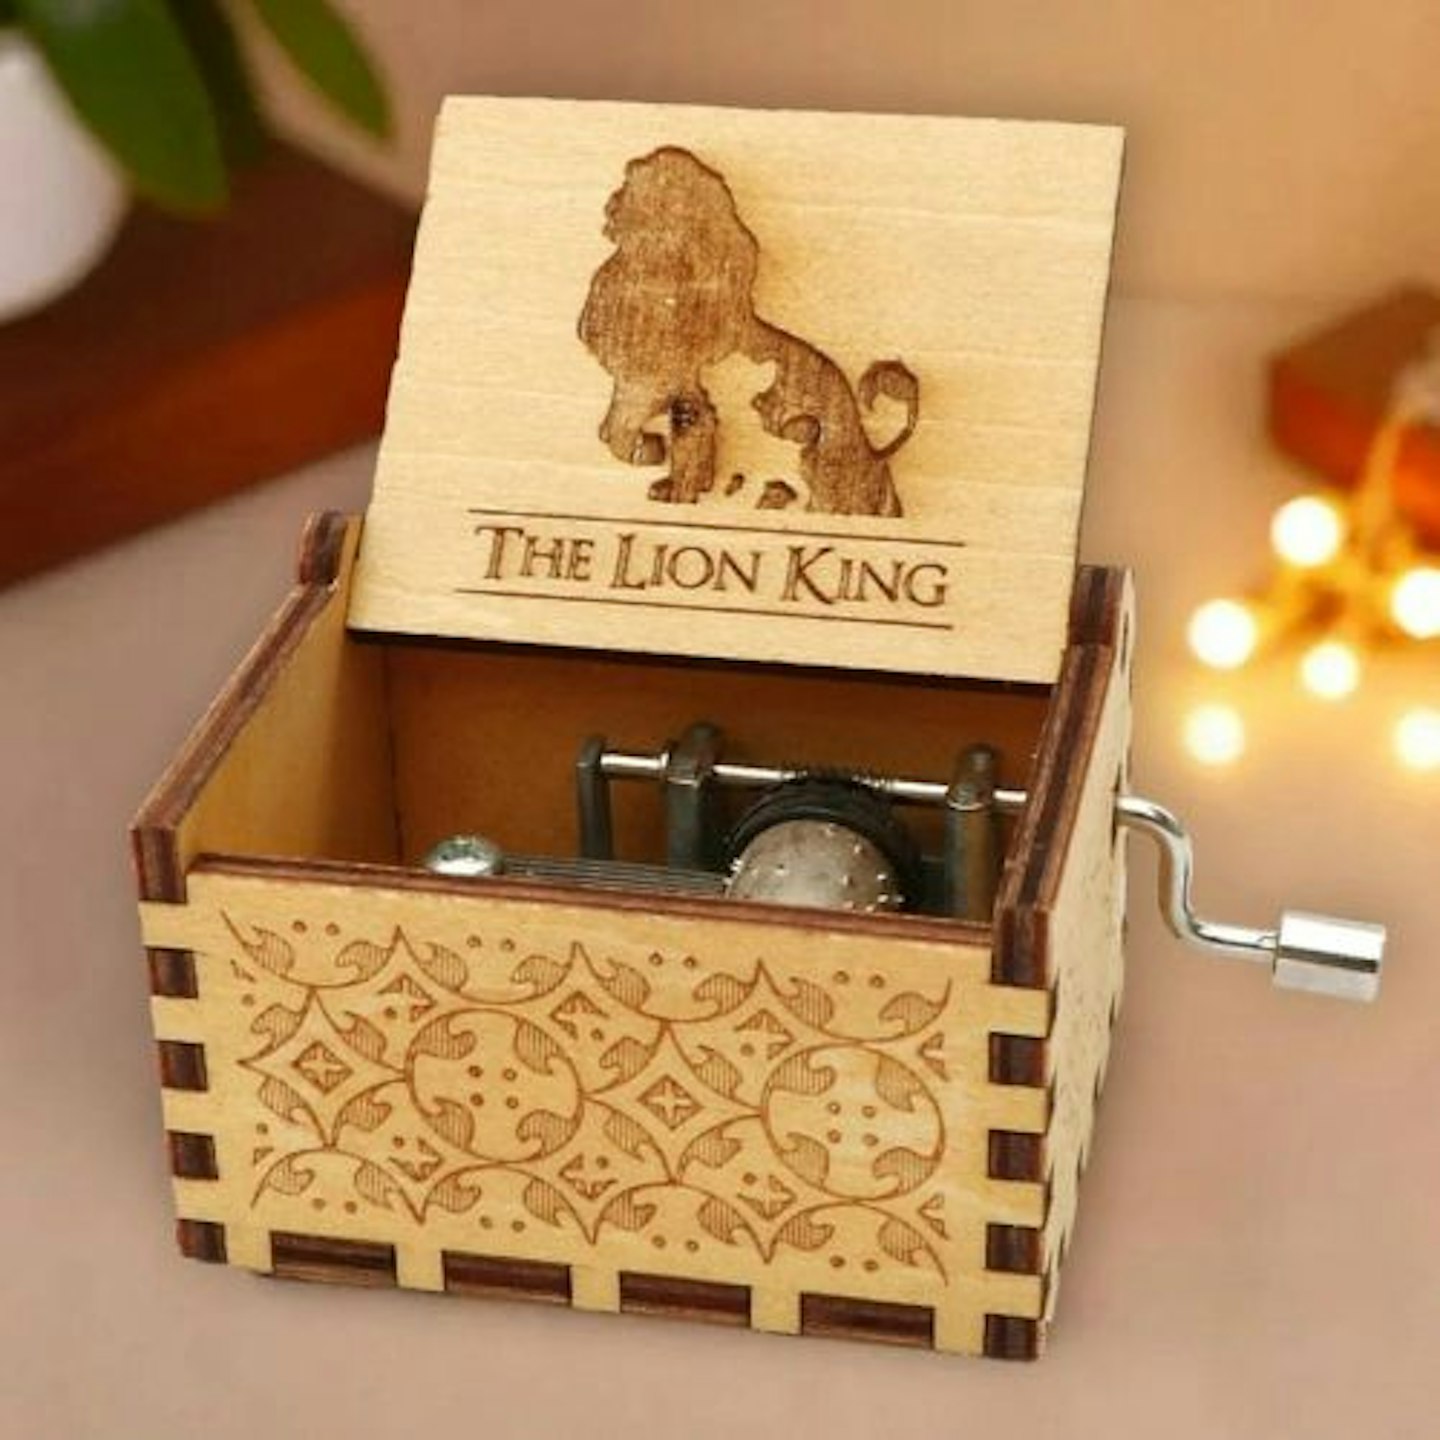 The Lion King Music Box